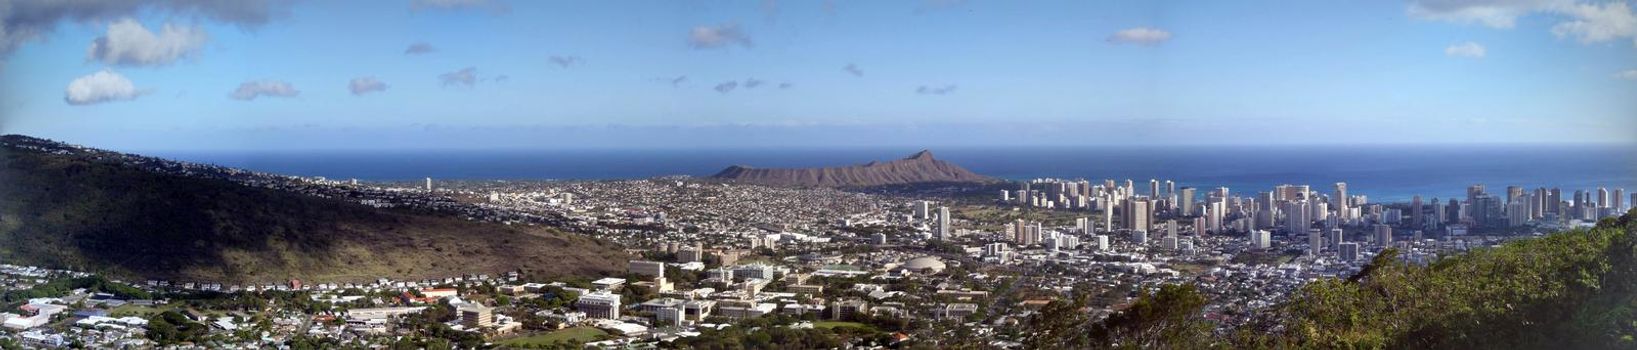 Aerial view of Diamondhead, Waikiki, Kapahulu, Kahala, Pacific ocean from the mountains on Oahu, Hawaii. Panoramic.  August 29, 2010.